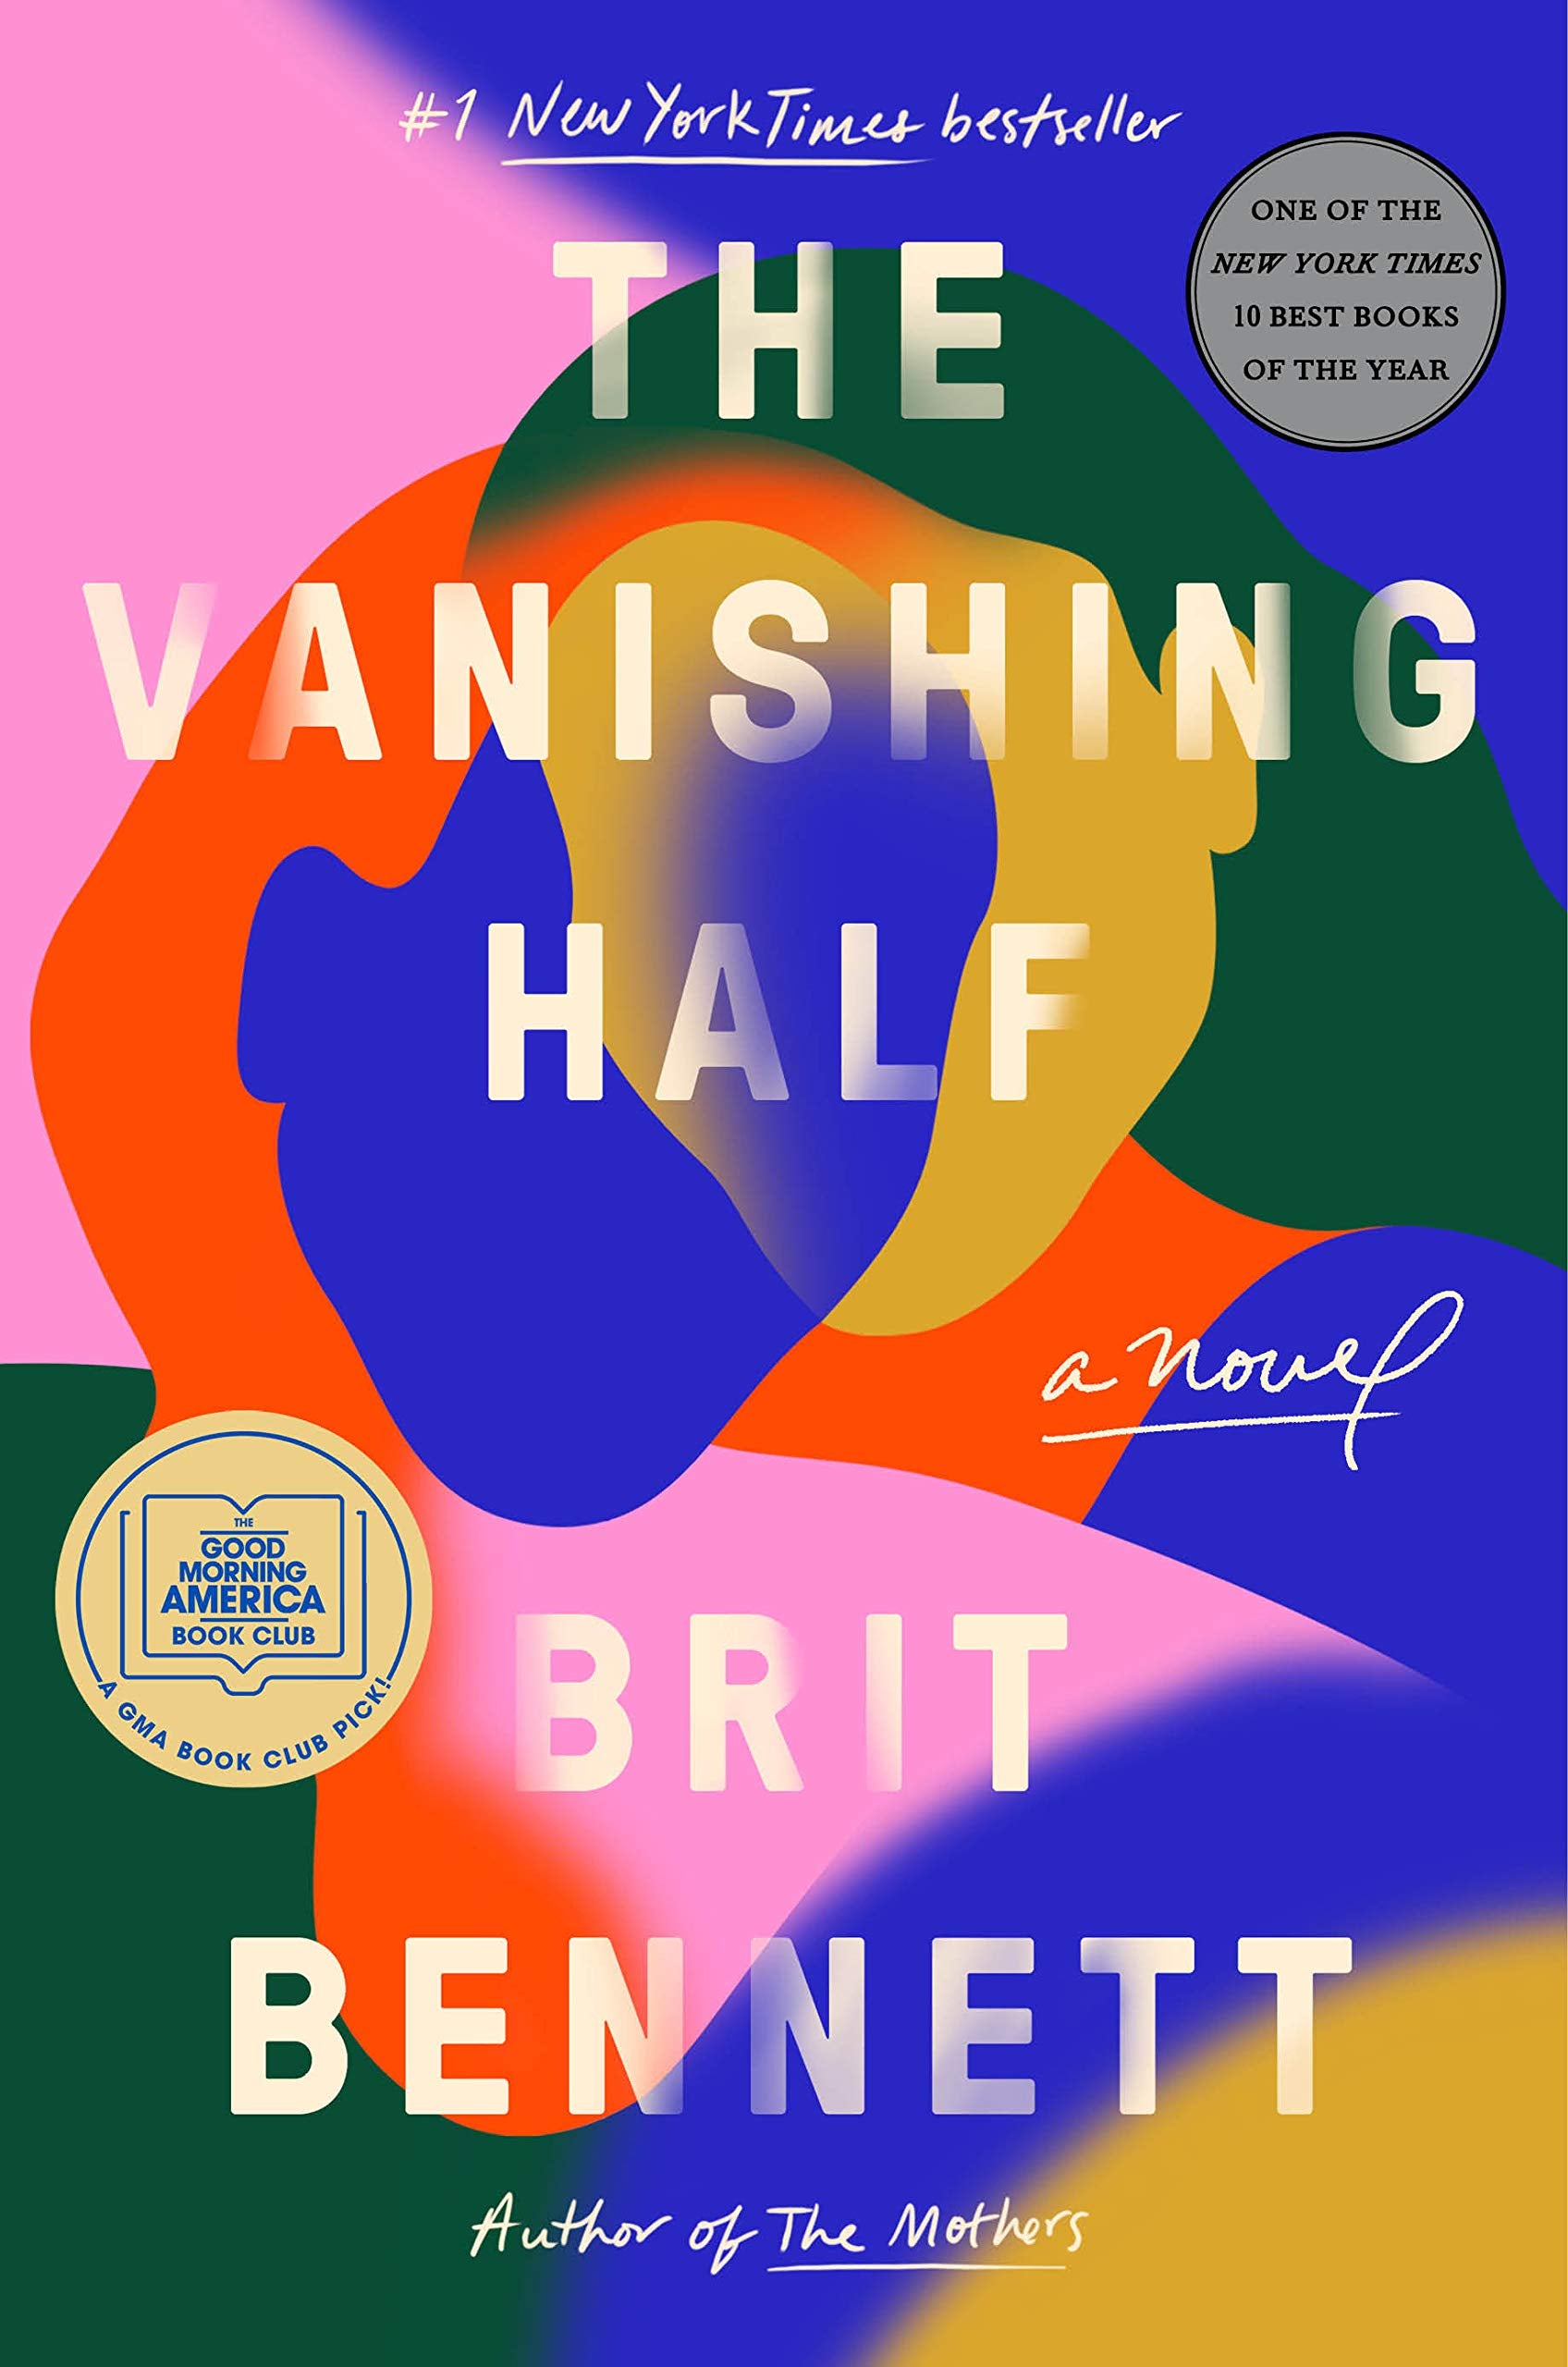 VANISHING HALF - Virginia Book Company